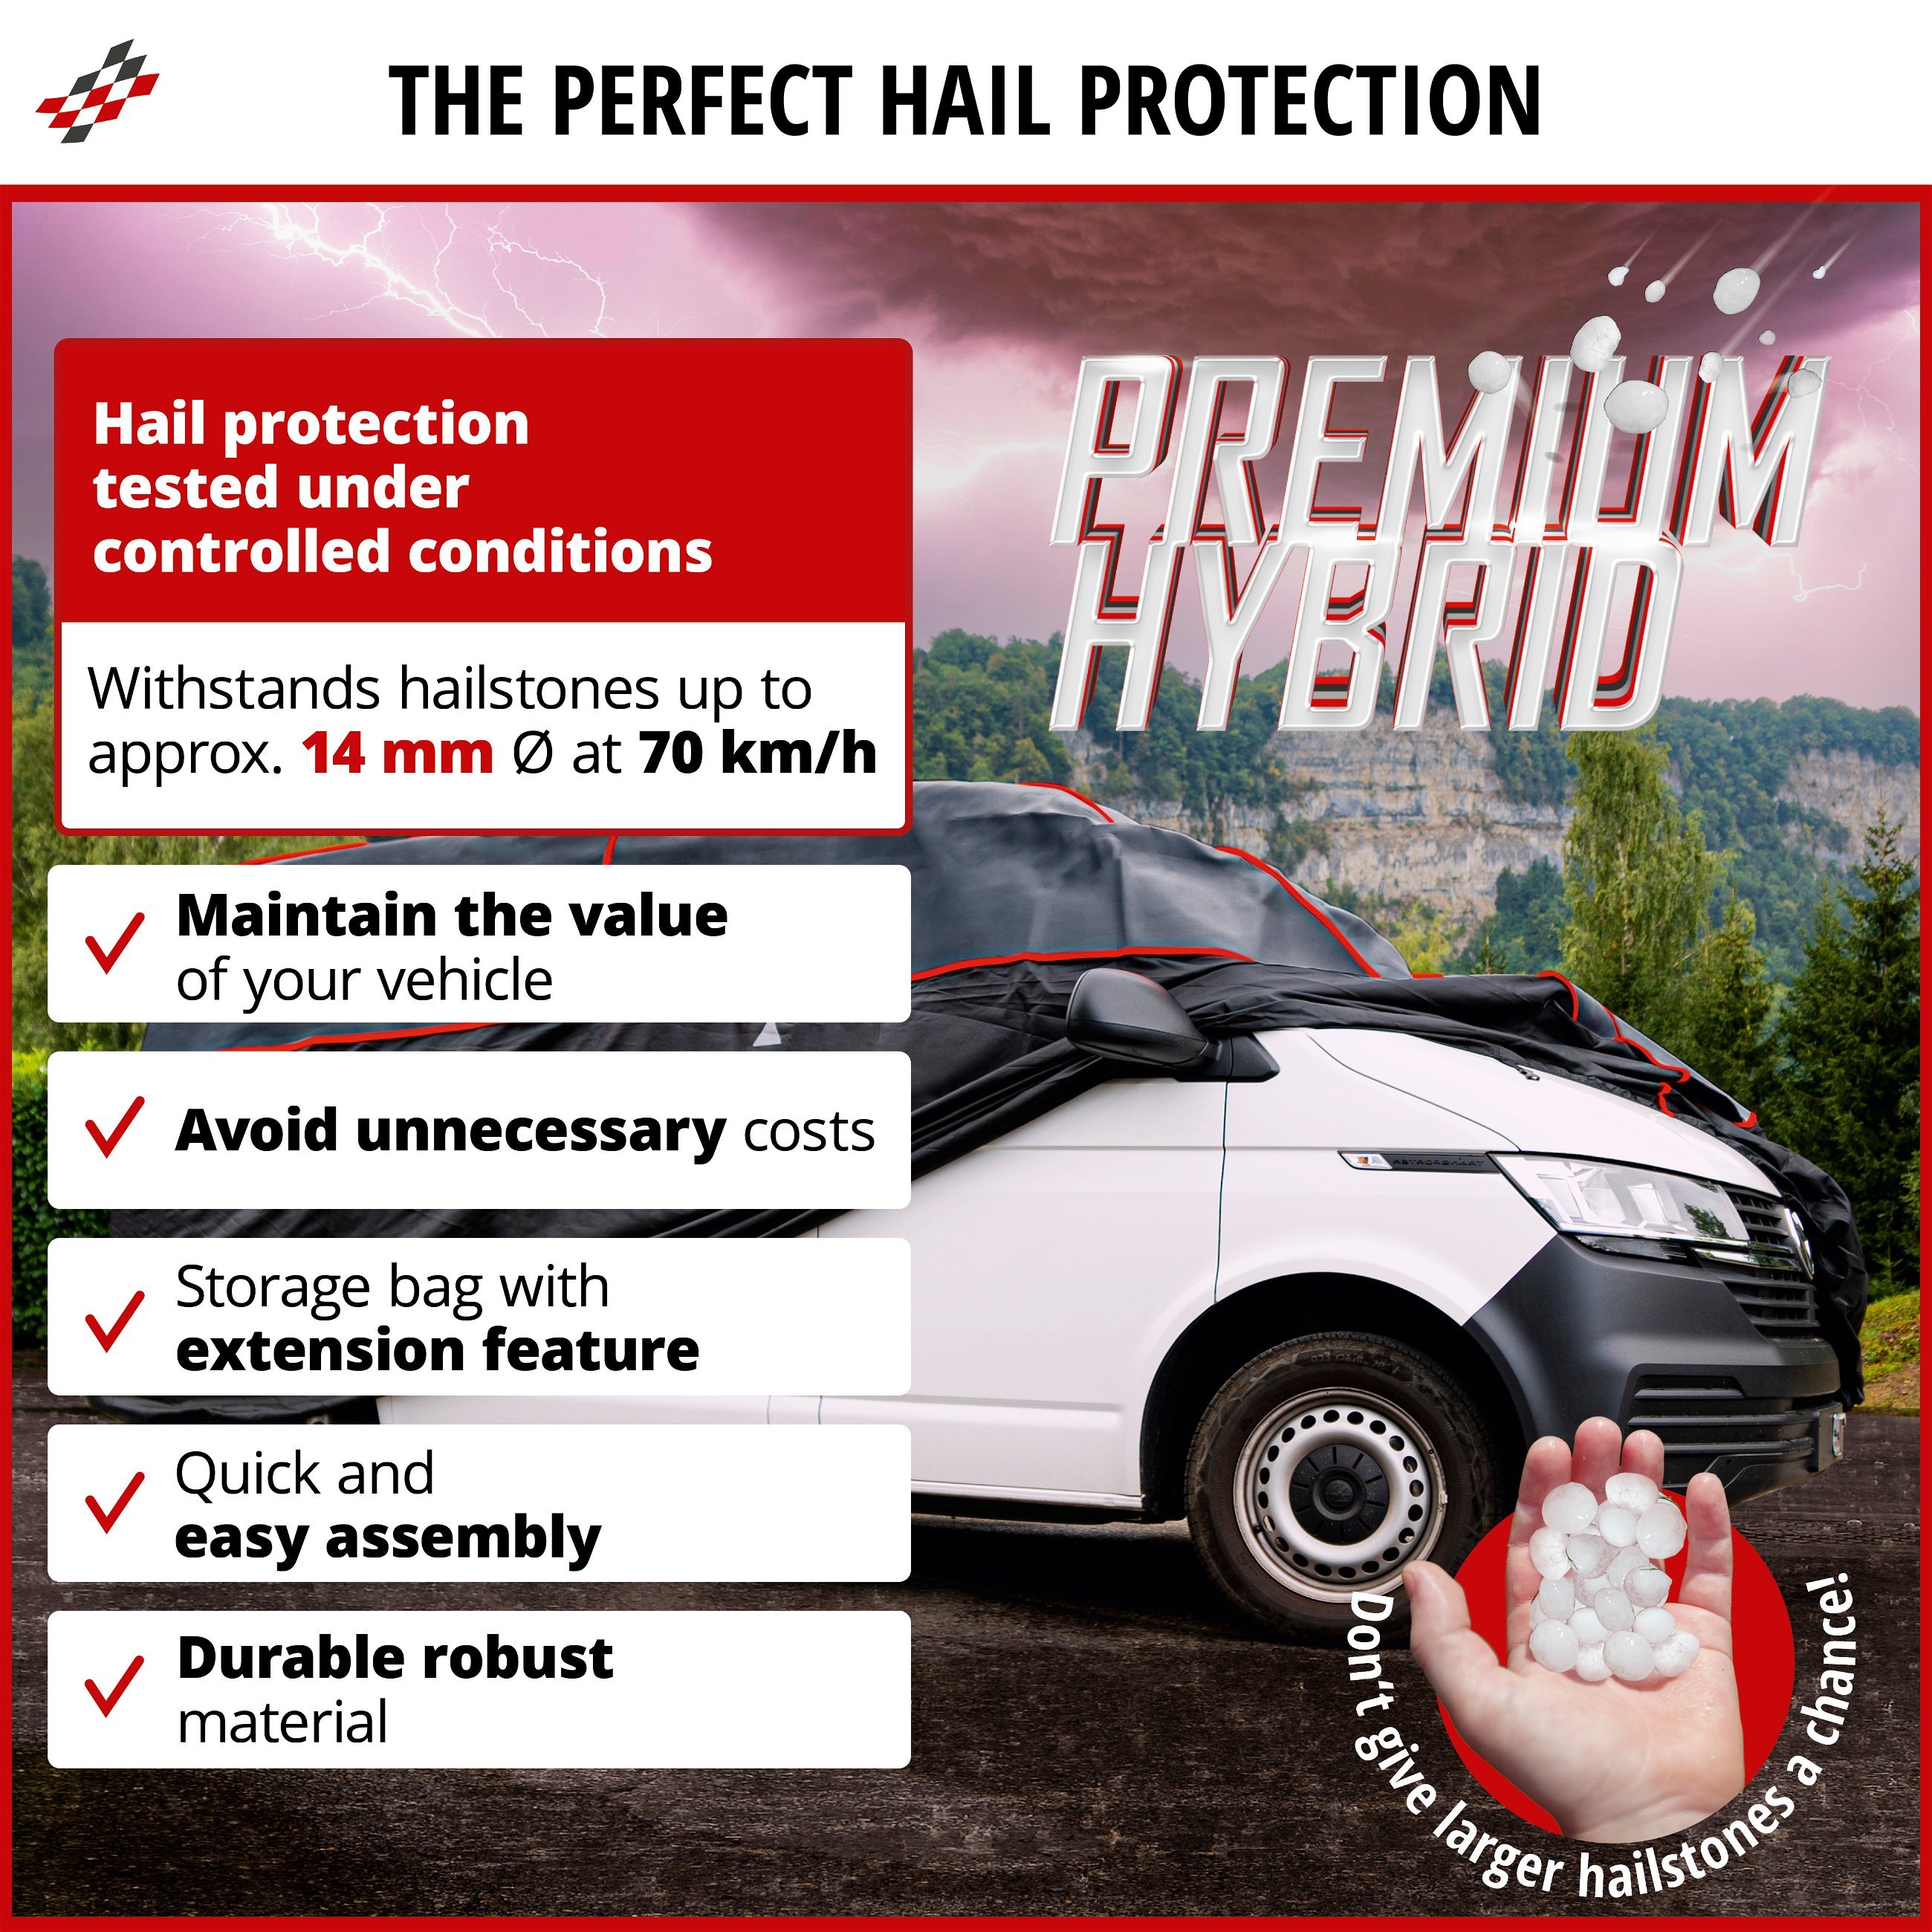 Bus hail protection cover Premium Hybrid size M